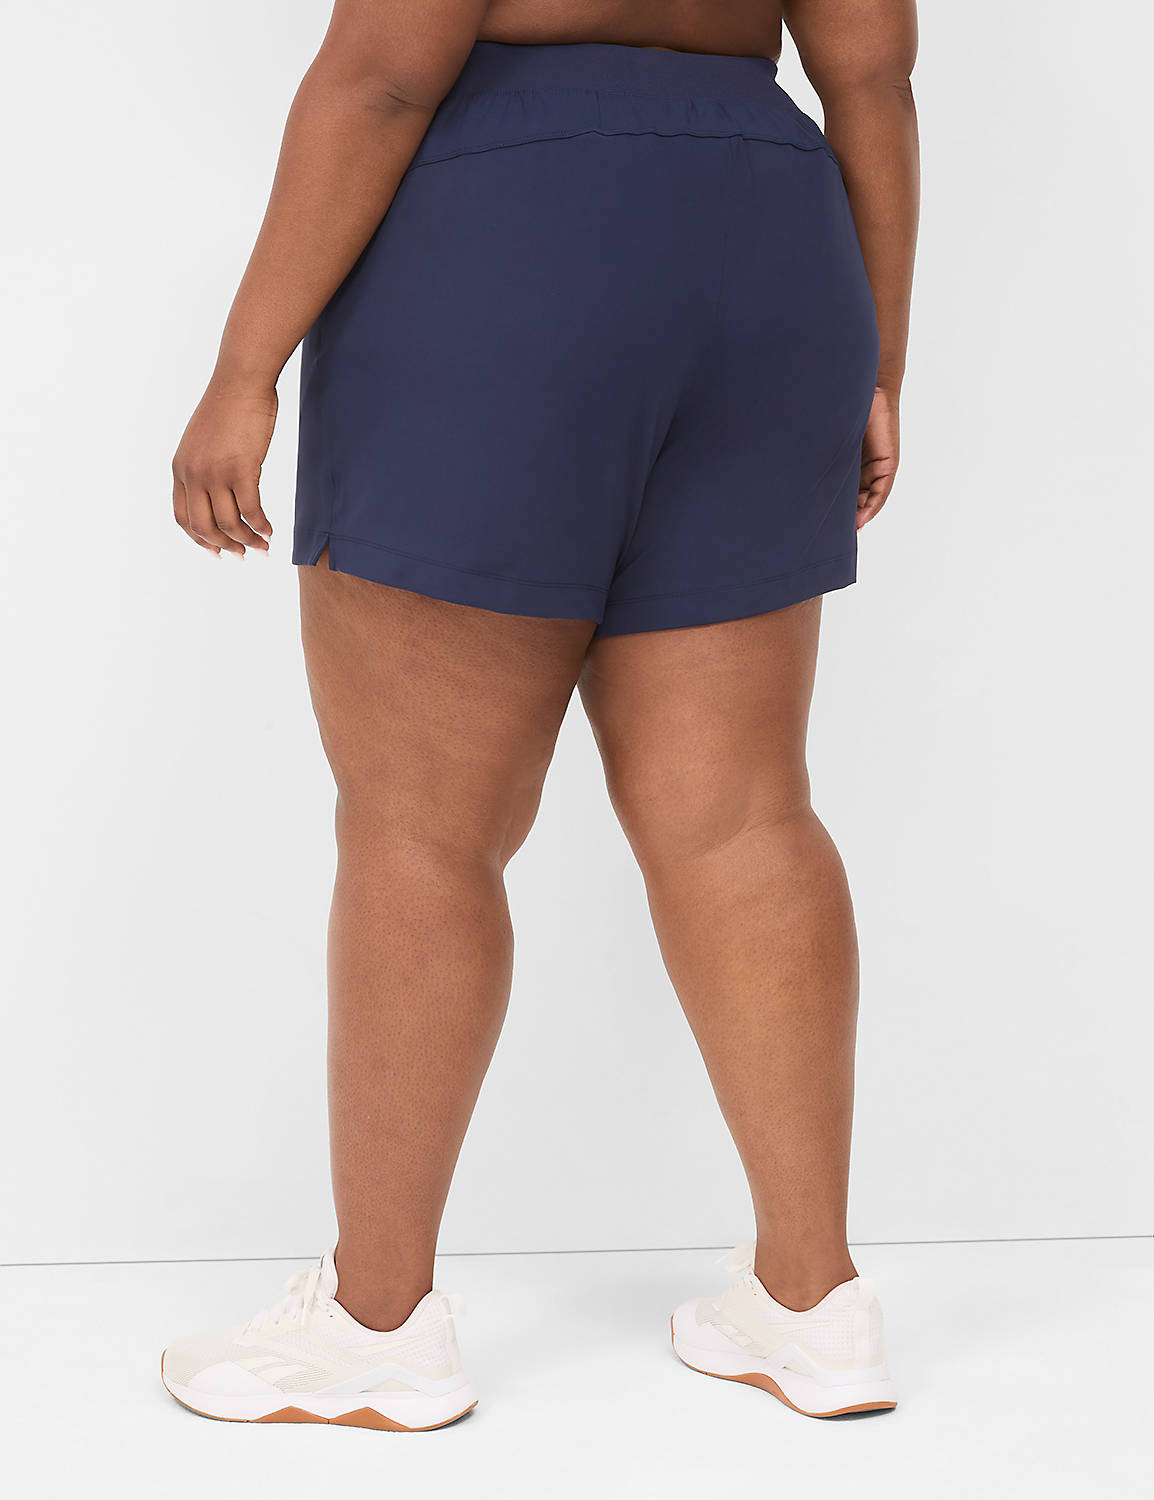 Livi Mid Rise Knit Trouser Short S Product Image 2